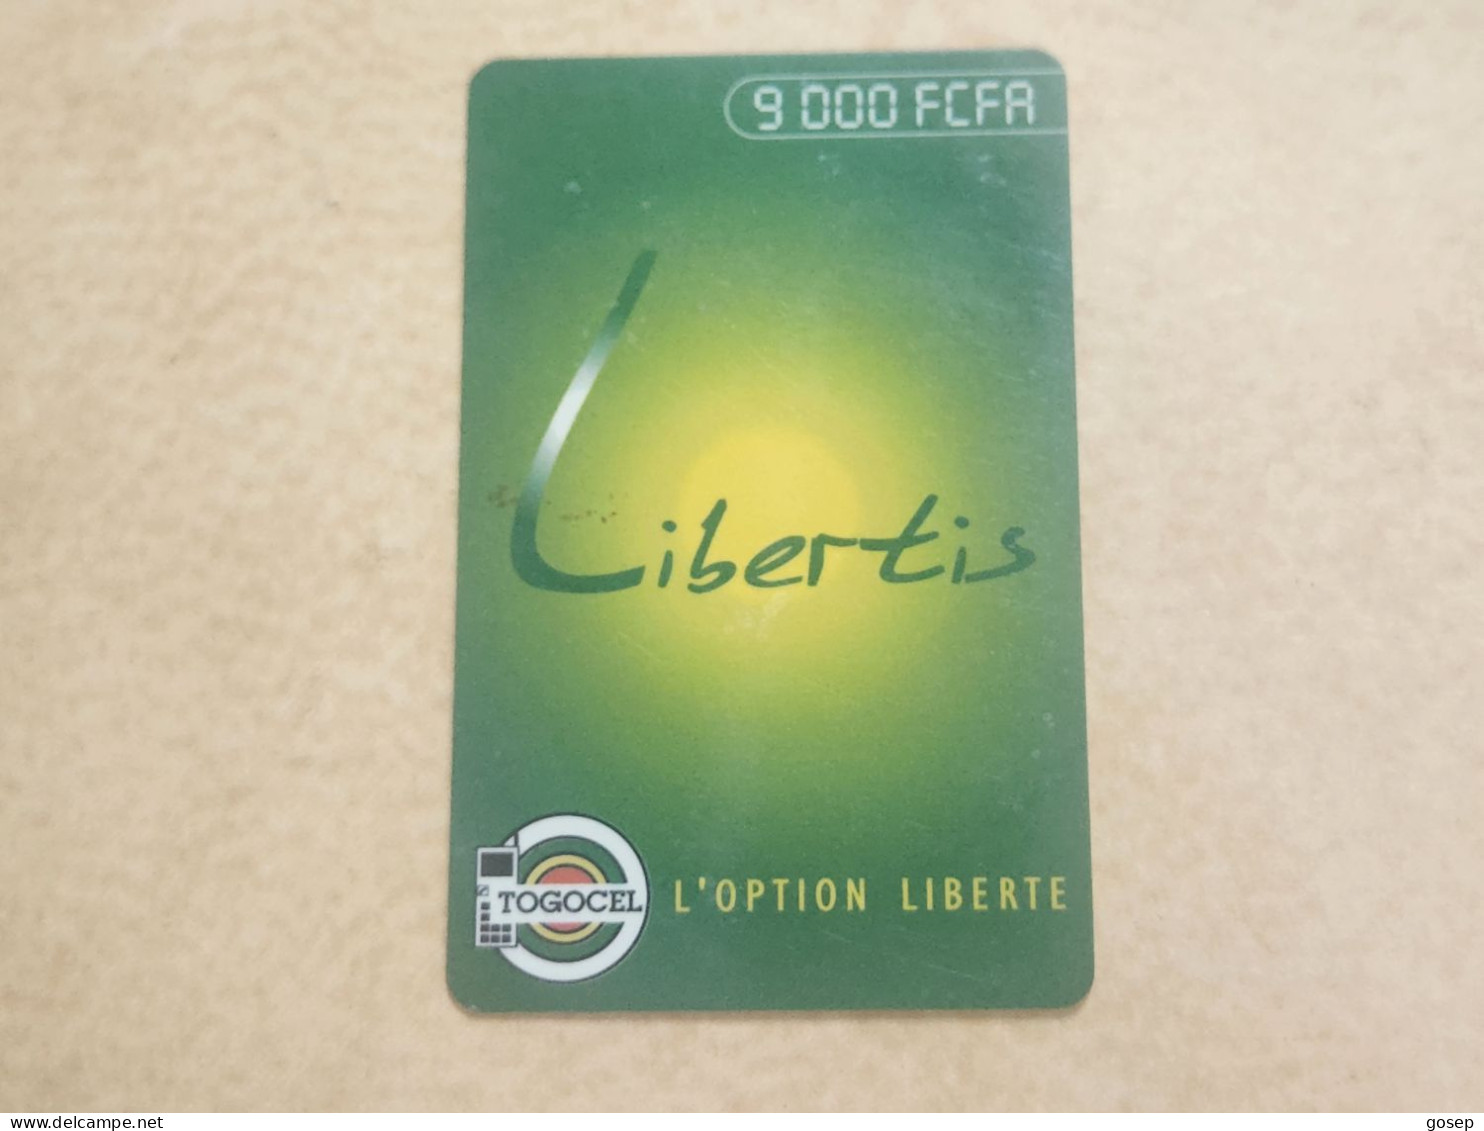 TOGO-(TG-LIB-REF-0010-0206)-Libertis-green 9.000 FCFA-(Vertical)-(9)-(9000FCFR)-(3030-0058-5400-39)-(used Card - Togo